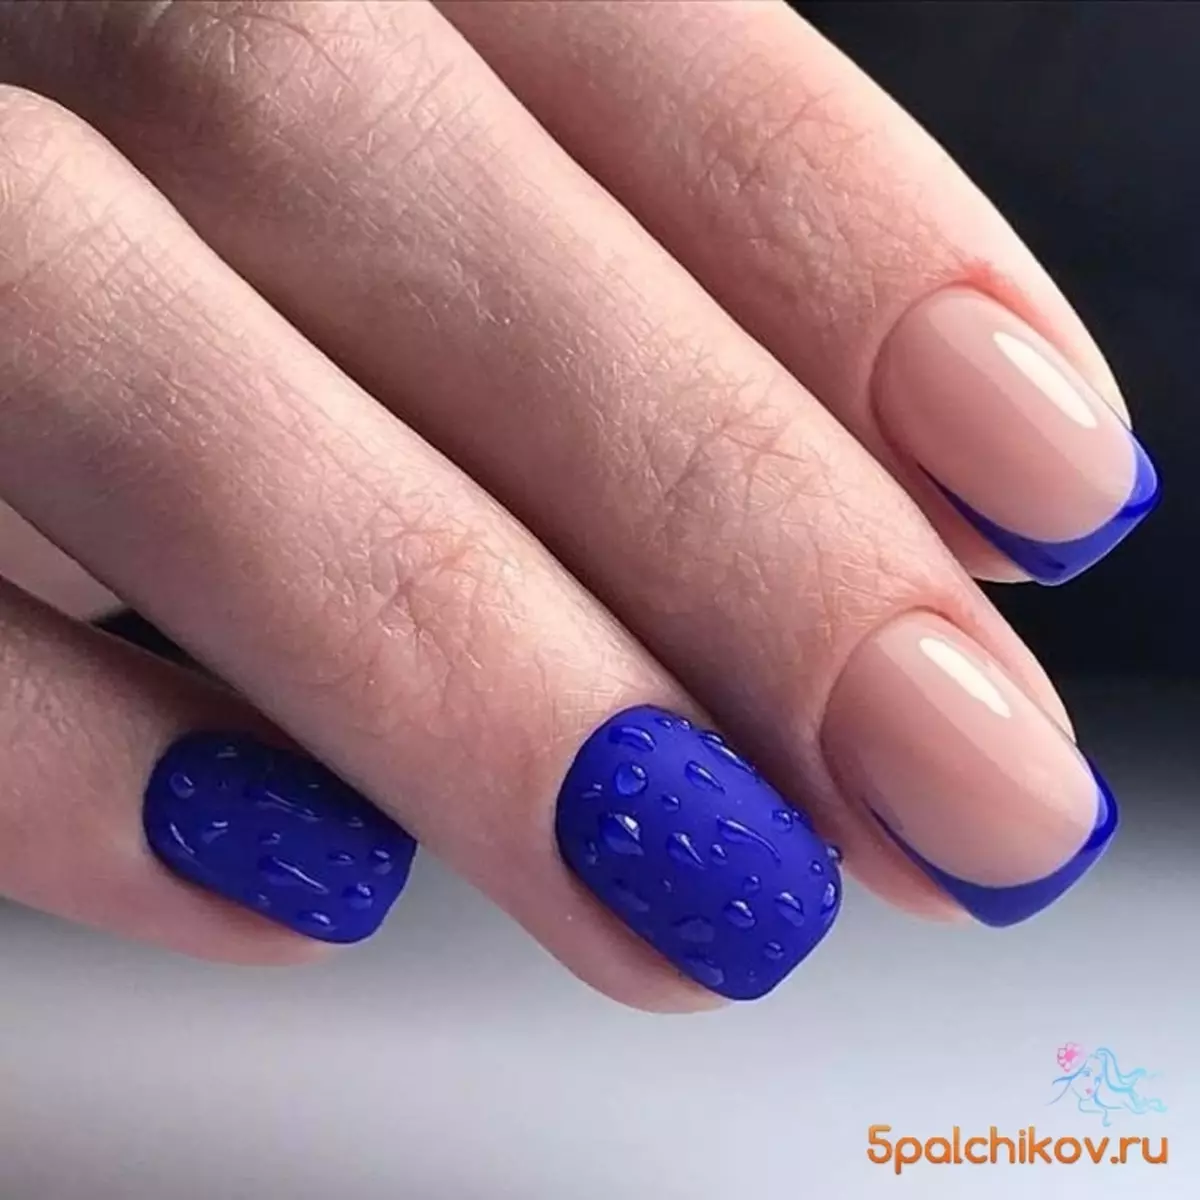 Френч с синим цветом на ногтях